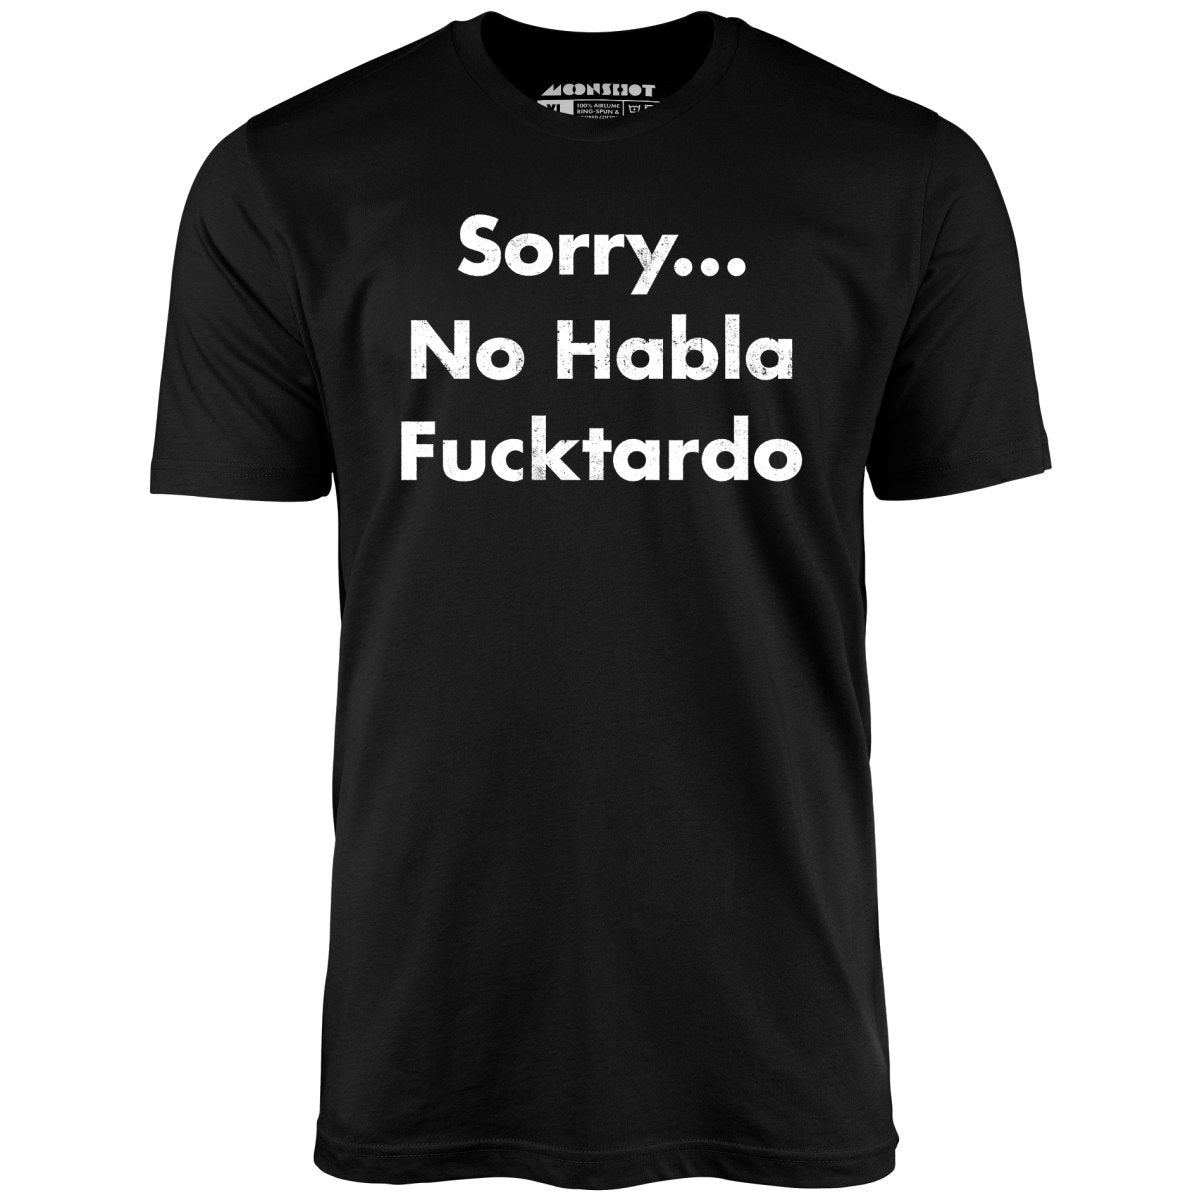 Sorry... No Habla Fucktardo - Unisex T-Shirt